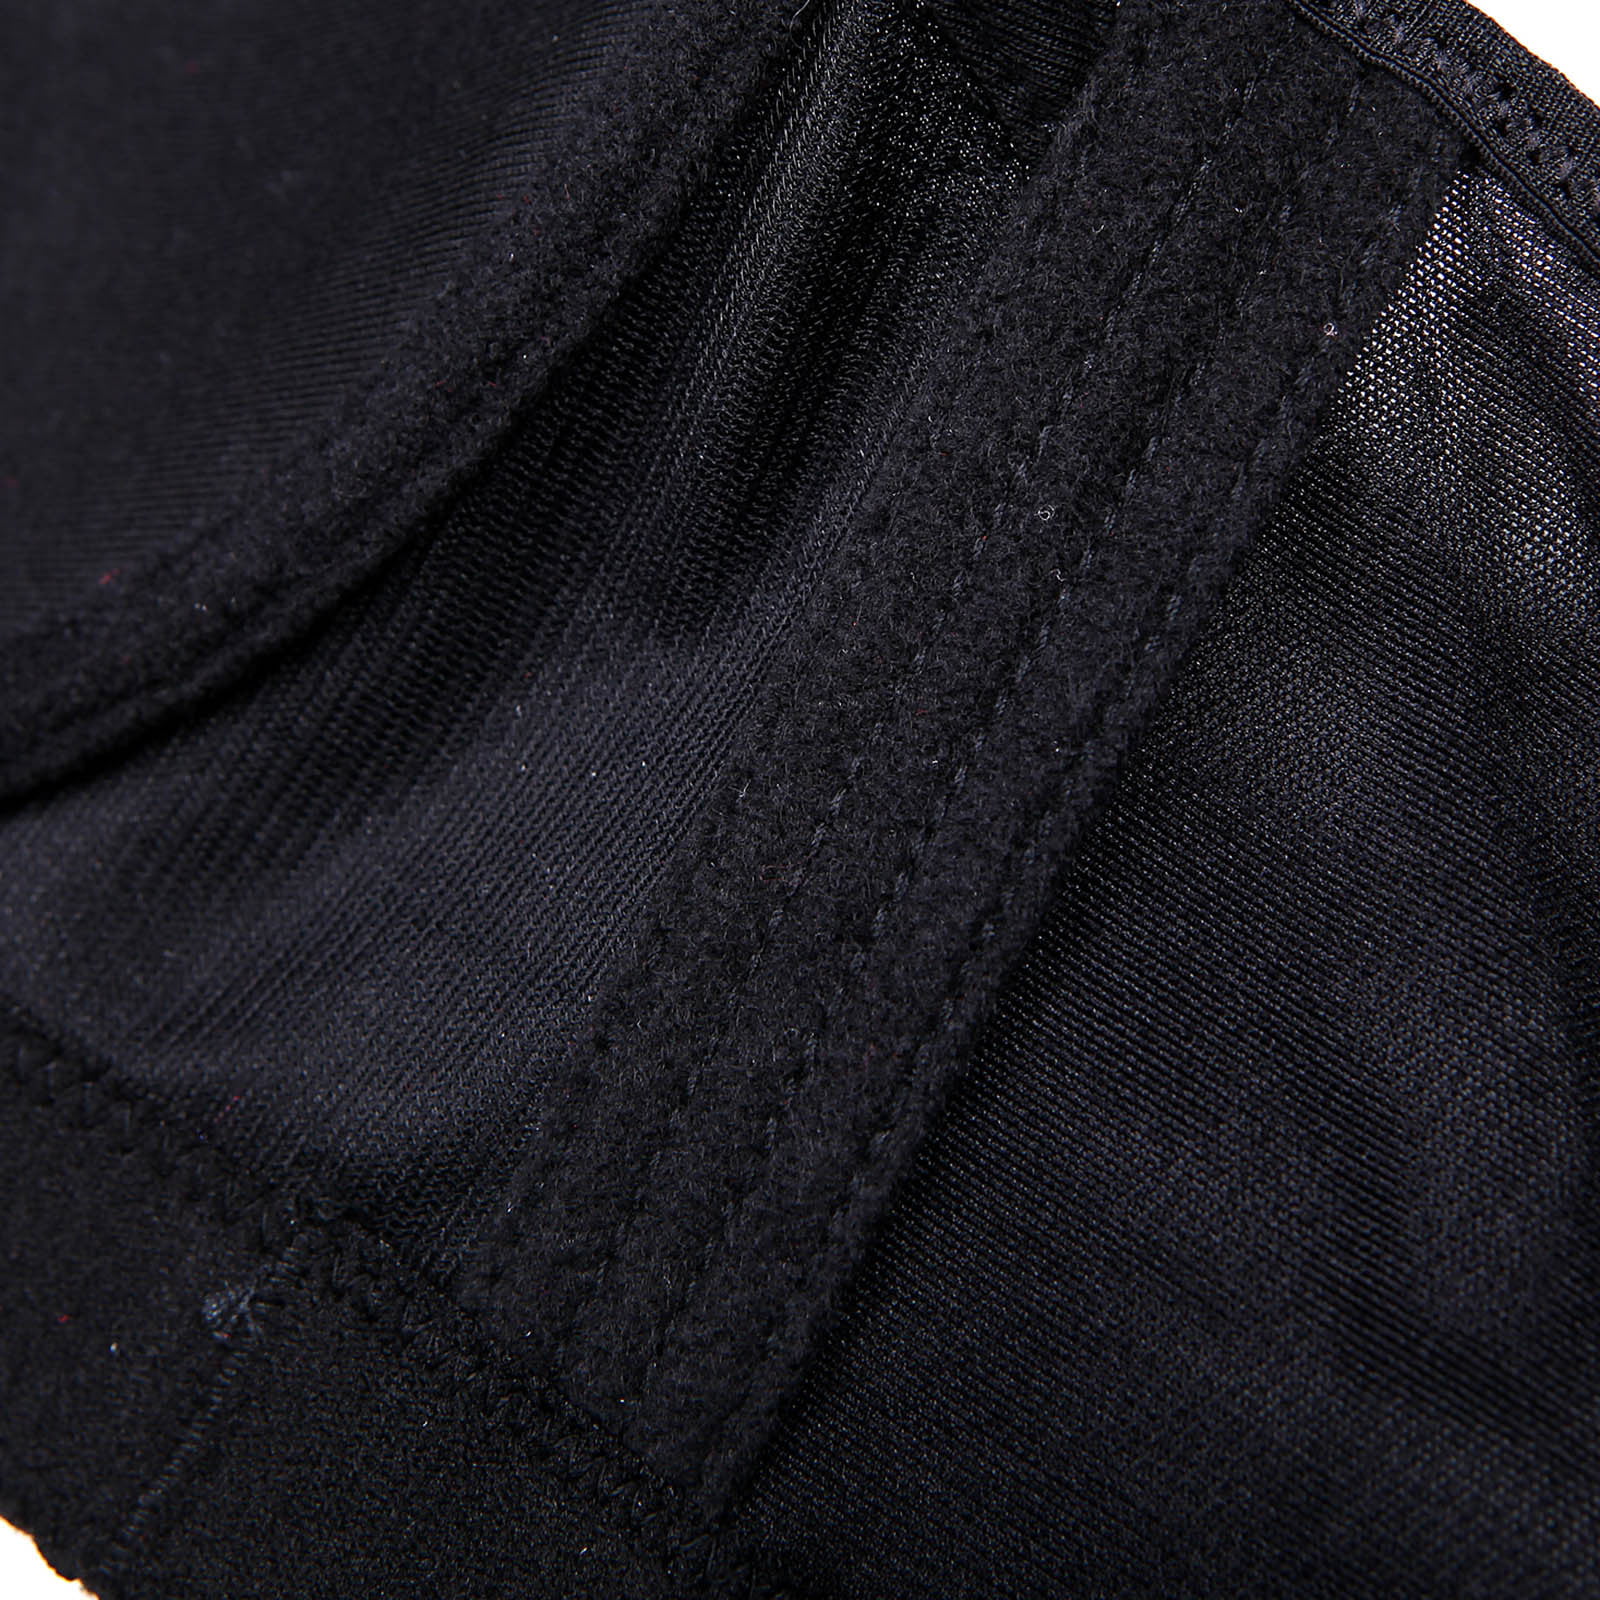 Aayomet Womens Plus Size Bra Womens Comfort Lace Bra Padded Wireless Bra  with Soft Foam Cups,Black 38/85C